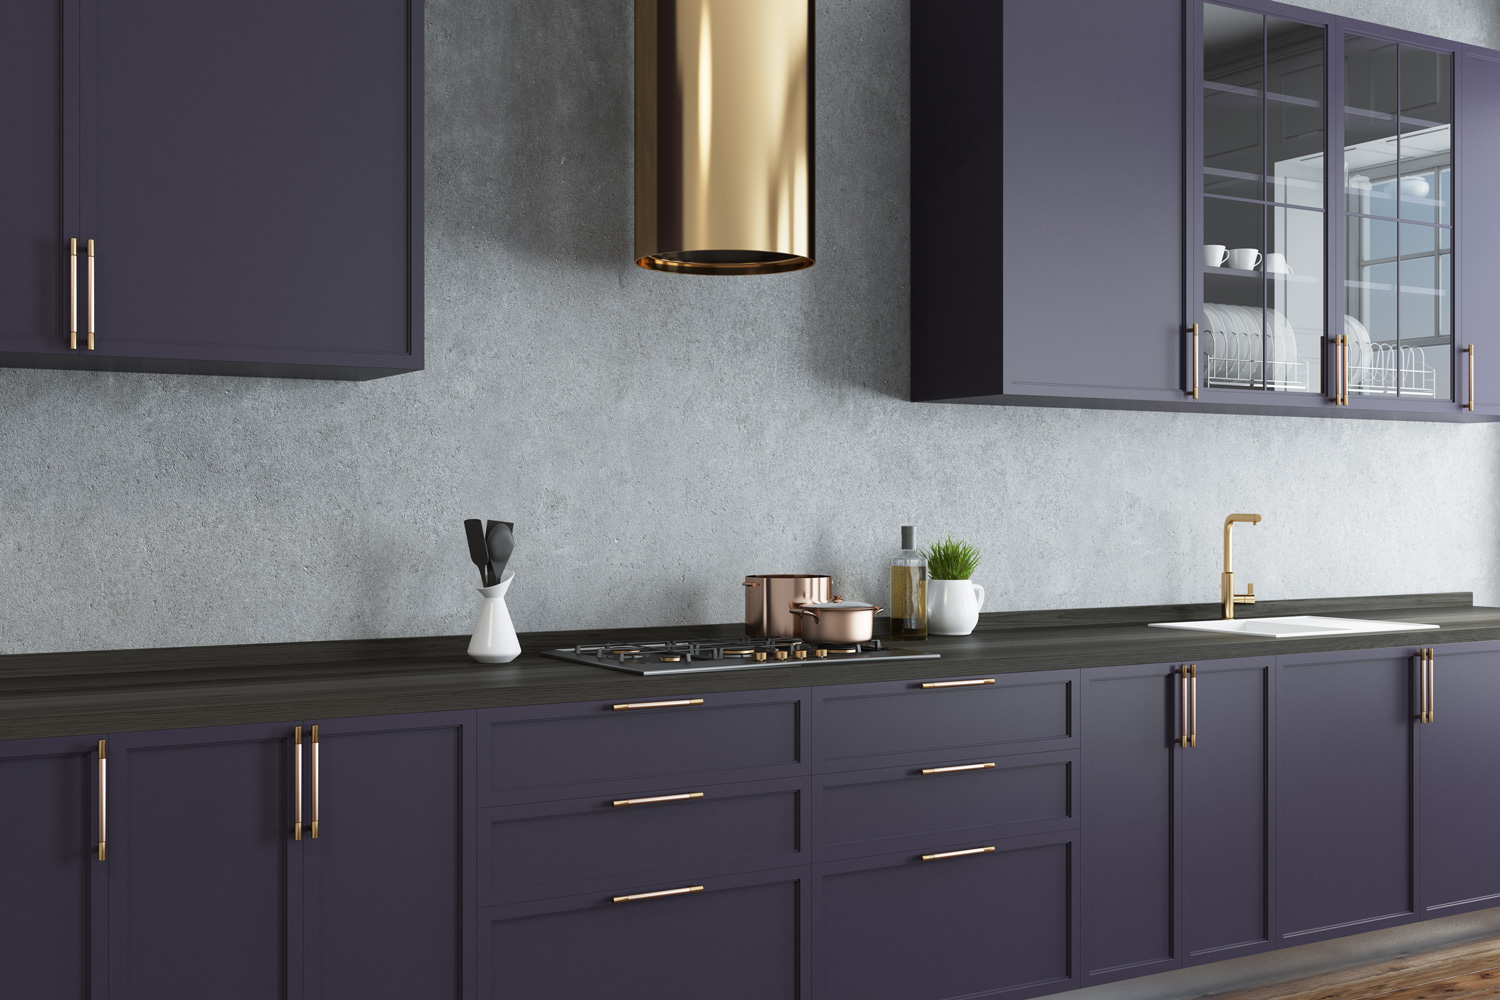 Concrete wall kitchen corner with a wooden floor and dark purple countertops.